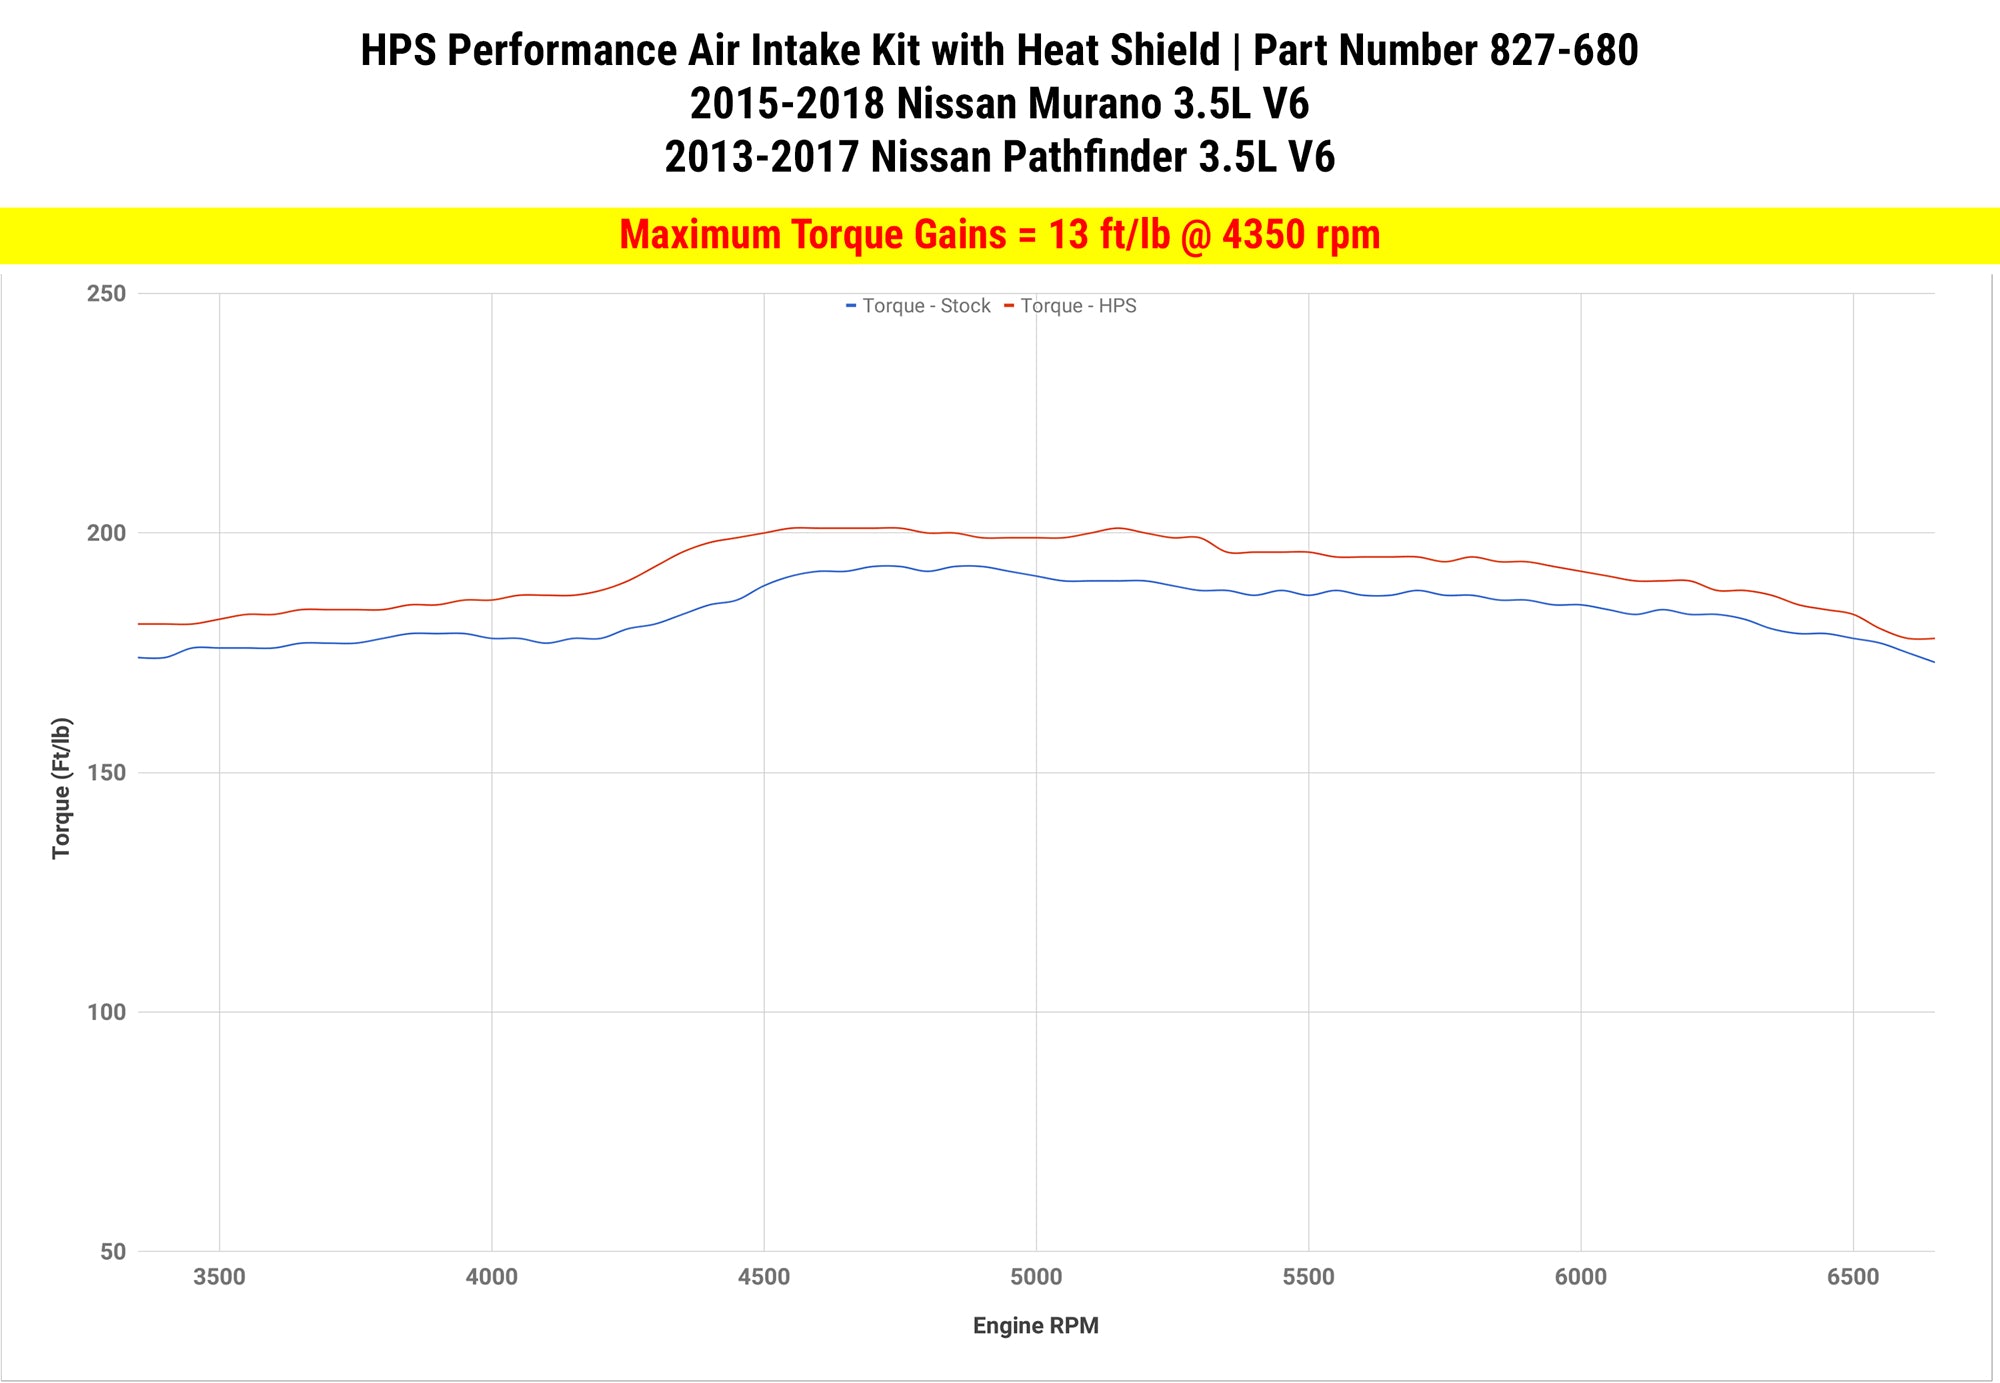 Dyno proven increase torque 13 ft/lb HPS Shortram Cold Air Intake Kit 2015-2018 Nissan Murano 3.5L V6 827-680